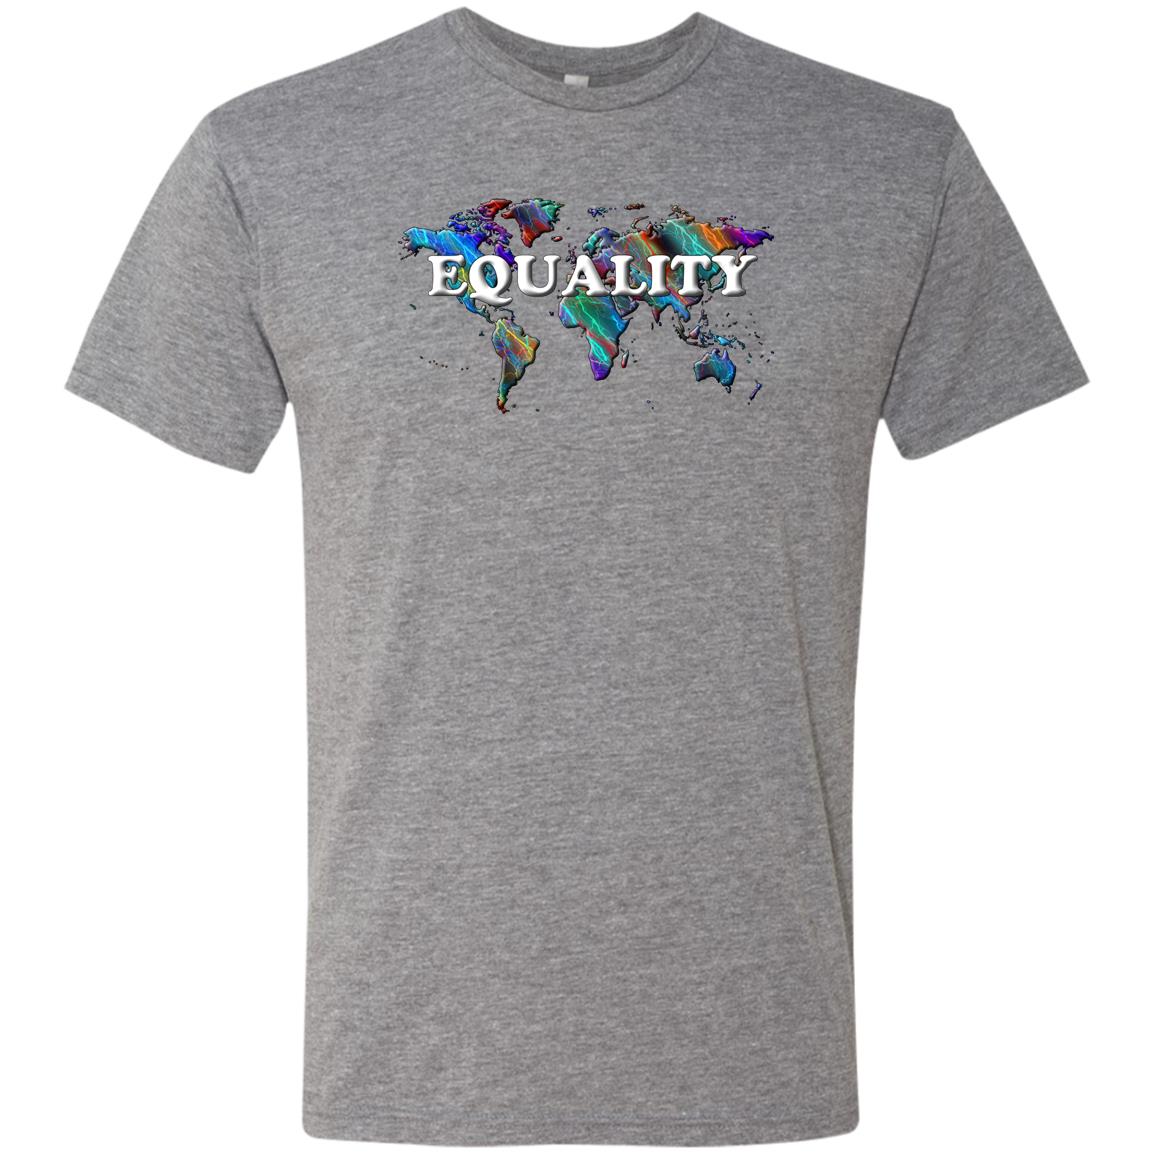 Equality Statement T-Shirt